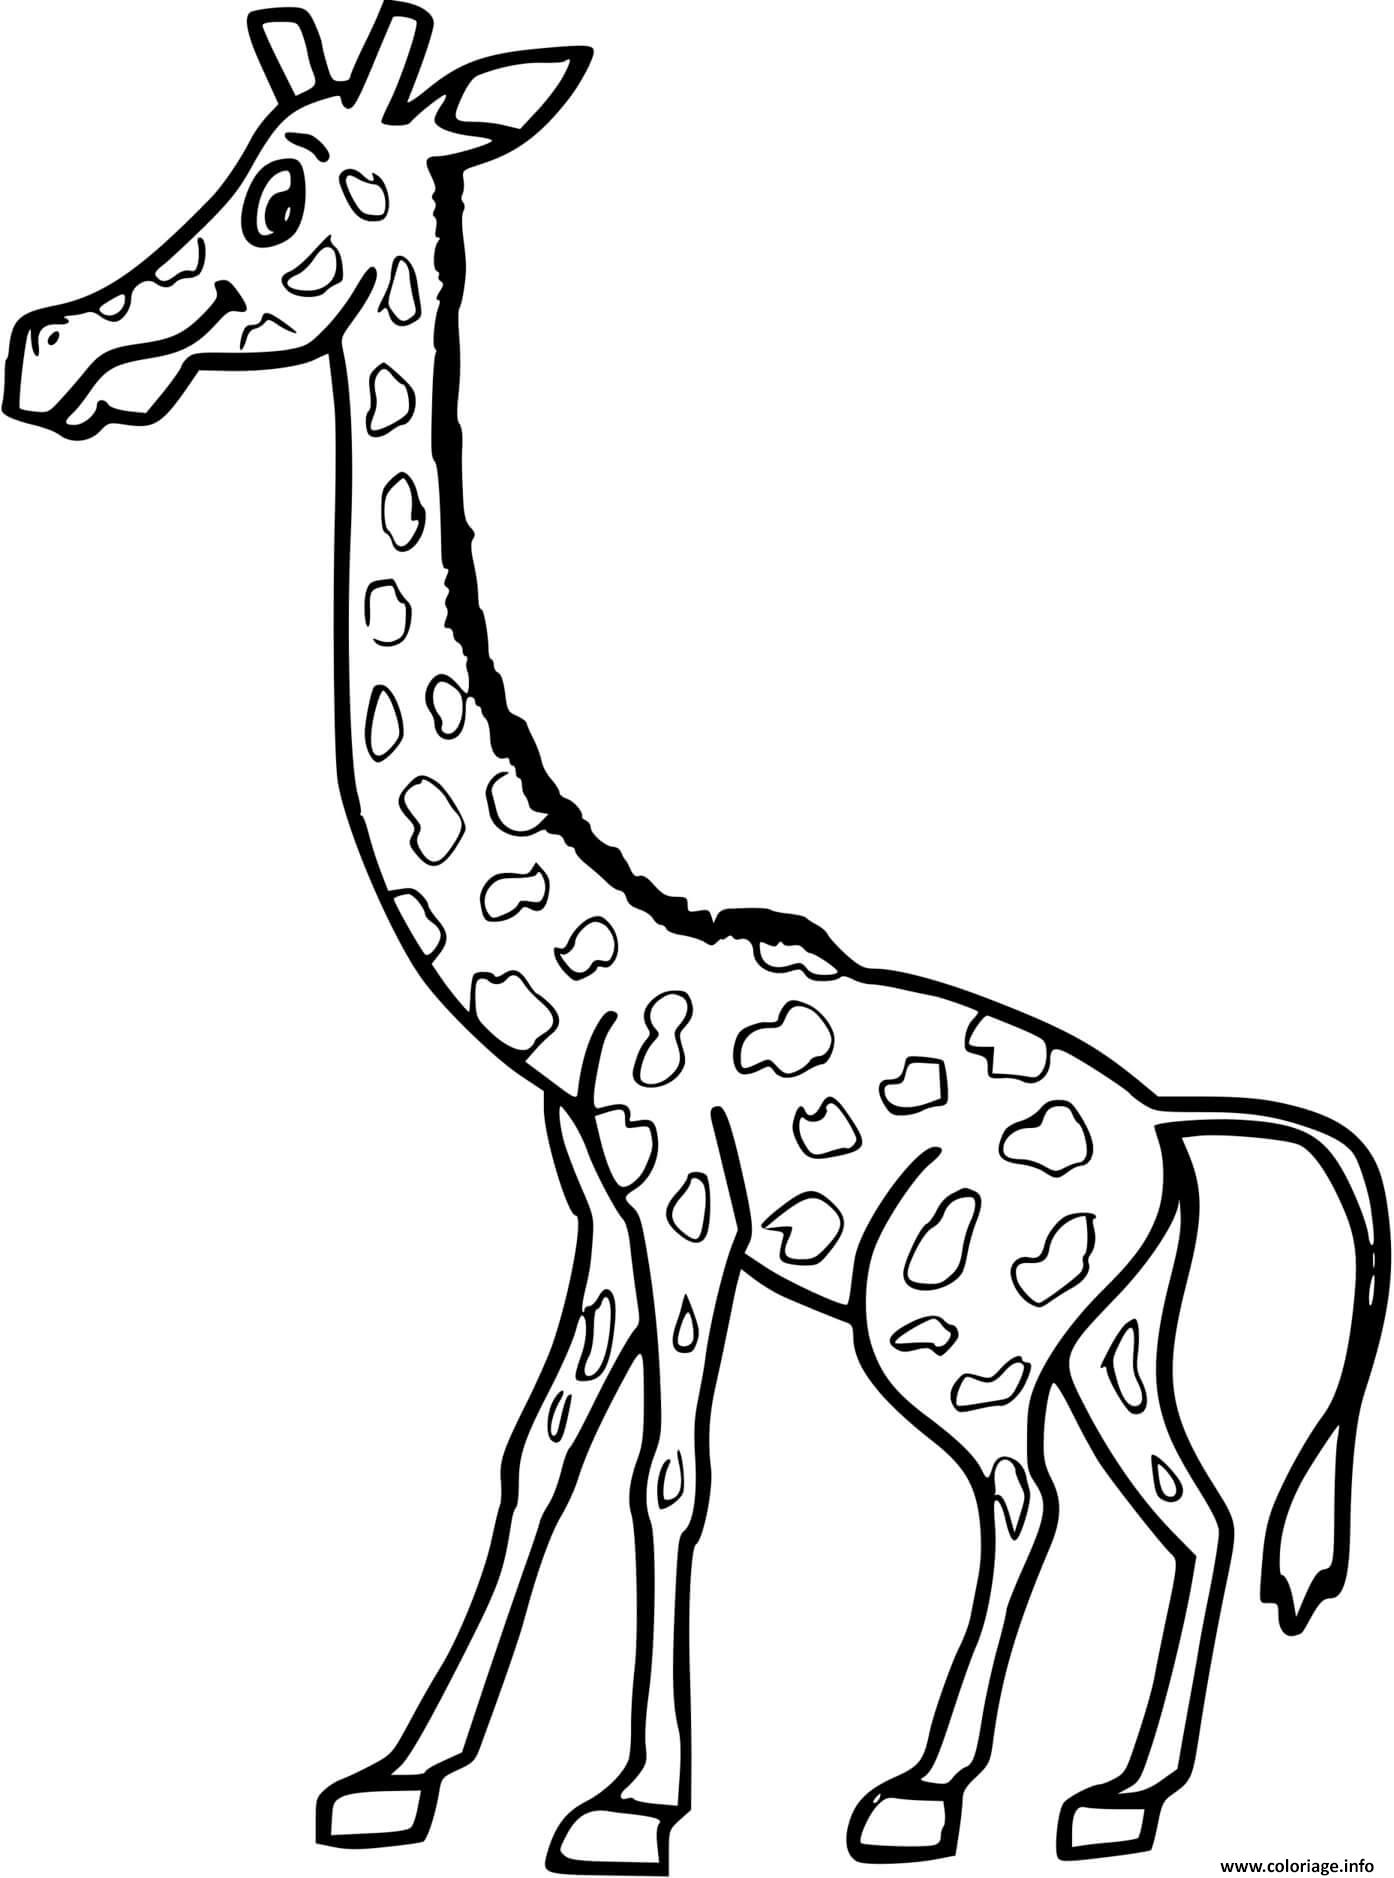 Dessin une grande girafe Coloriage Gratuit à Imprimer